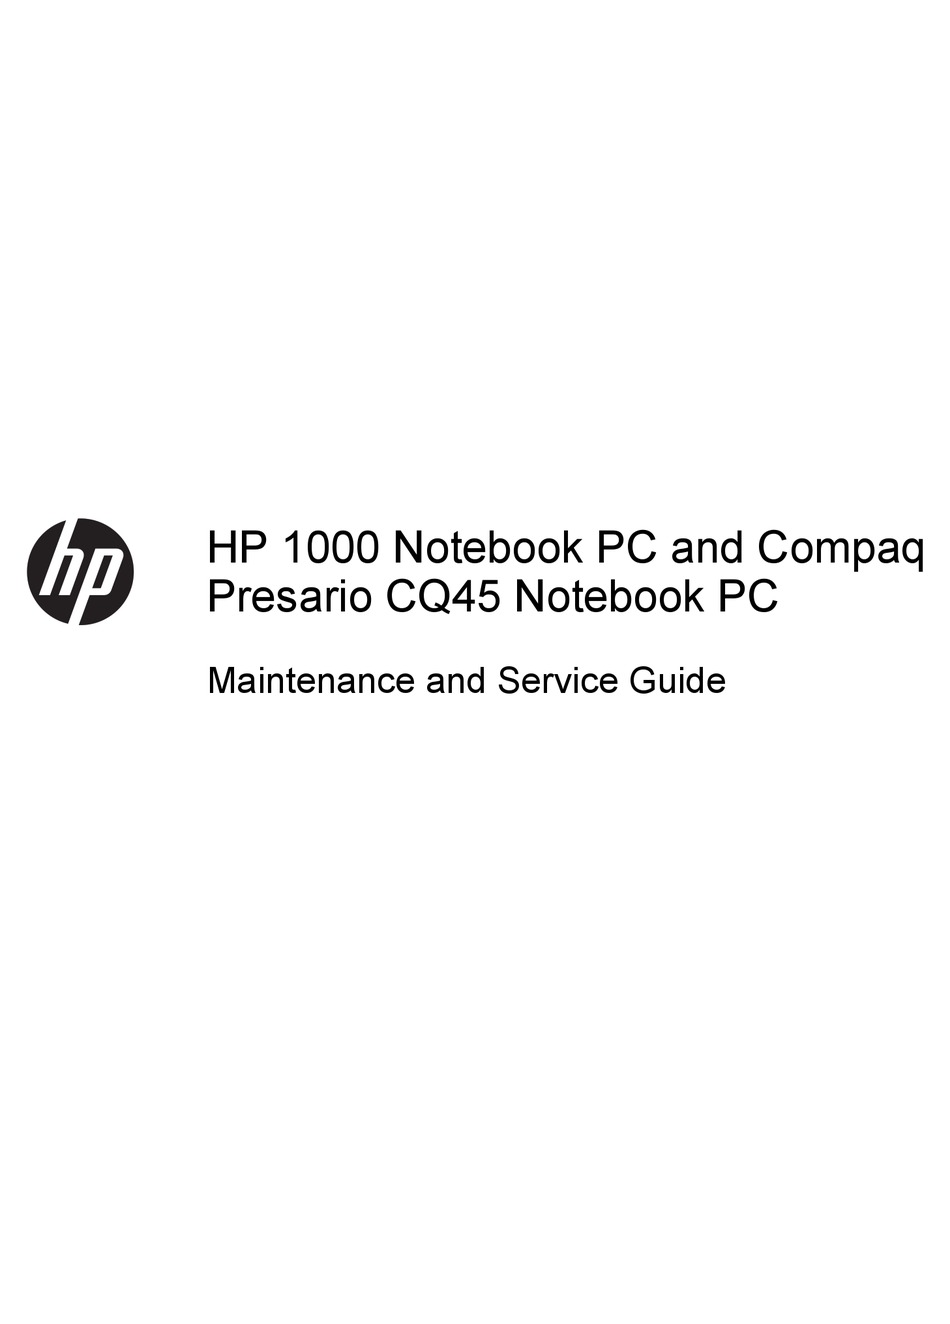 Download Hp C7280 Service Manual Pdf free